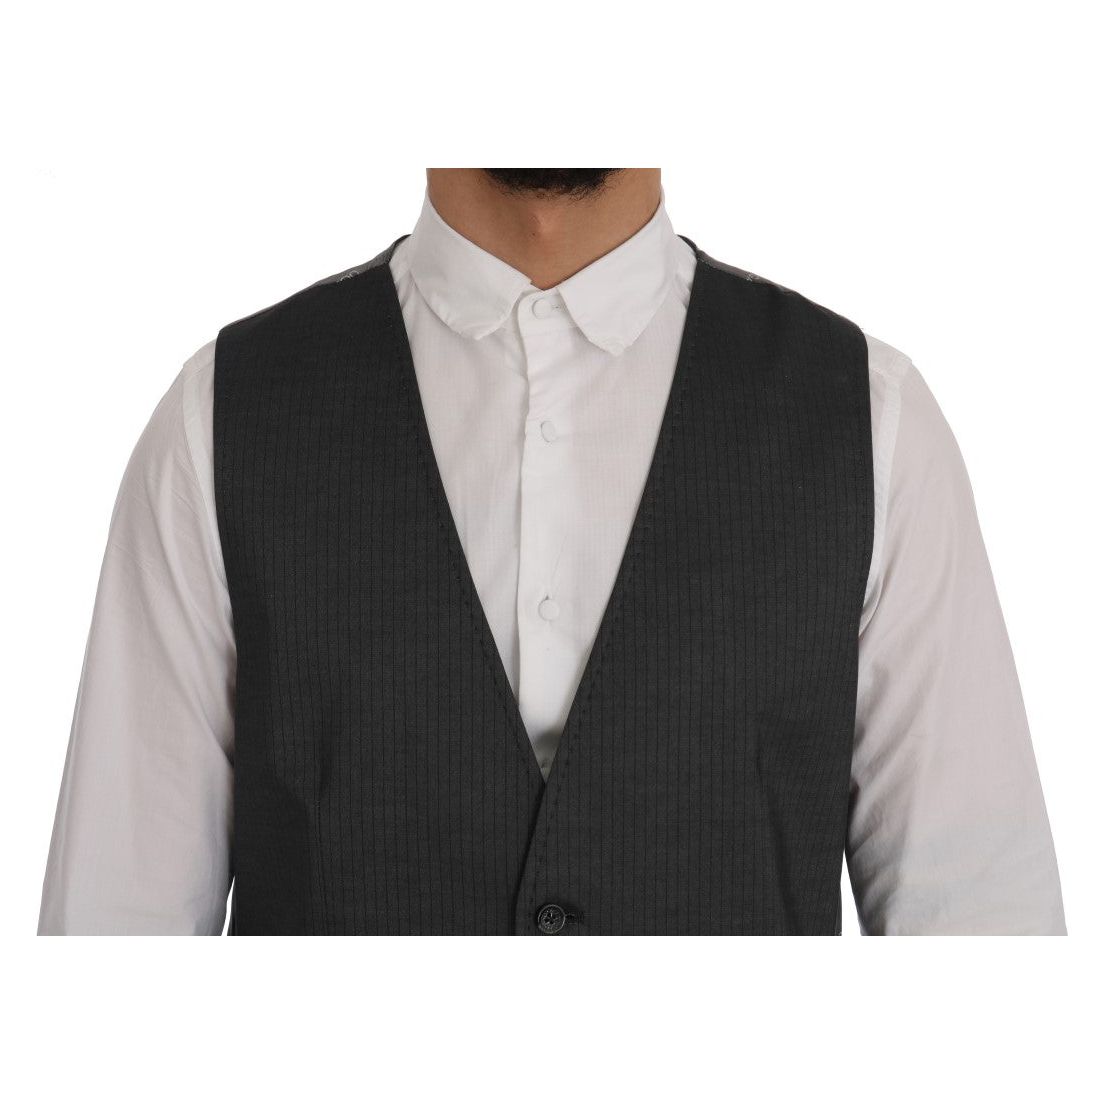 Dolce & Gabbana Sleek Gray Single-Breasted Waistcoat Vest gray-staff-cotton-rayon-vest-2 498757-gray-staff-cotton-rayon-vest-3-3.jpg